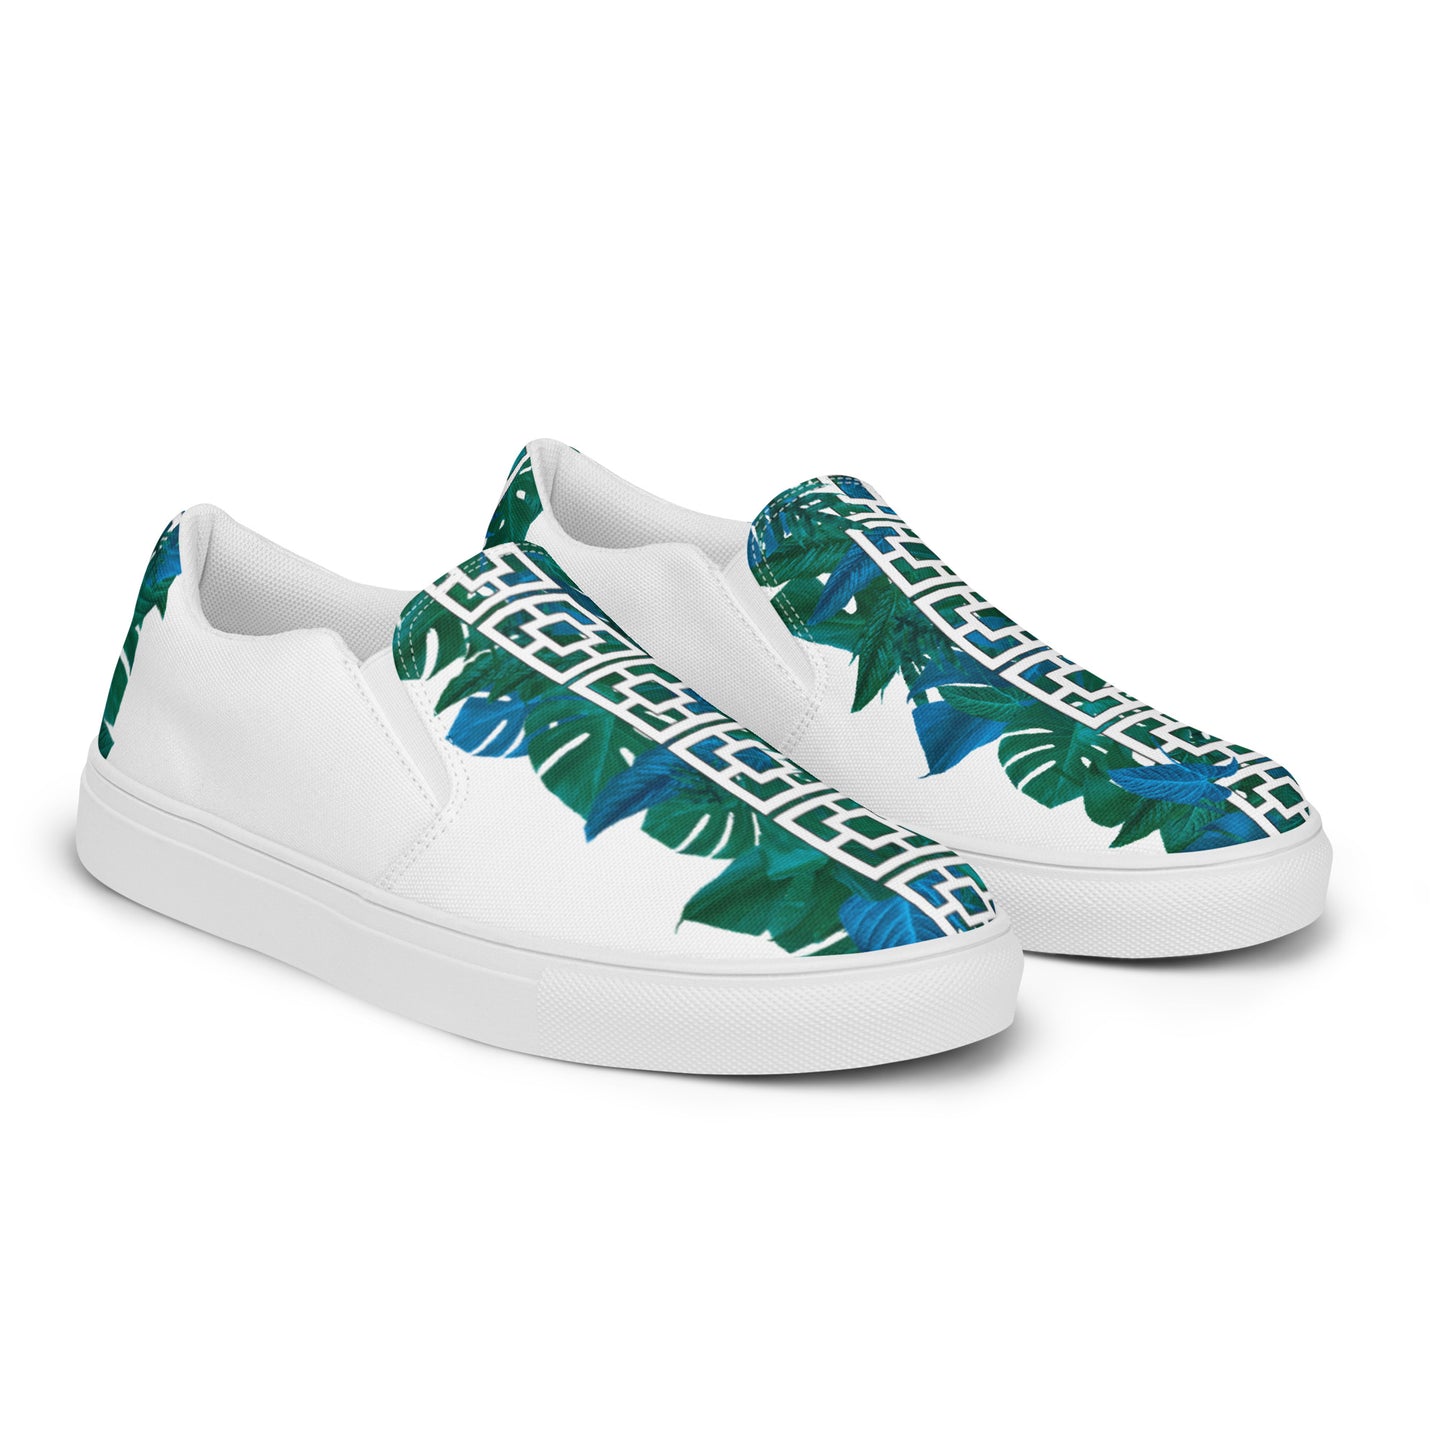 Men’s Aloha slip-on canvas shoes